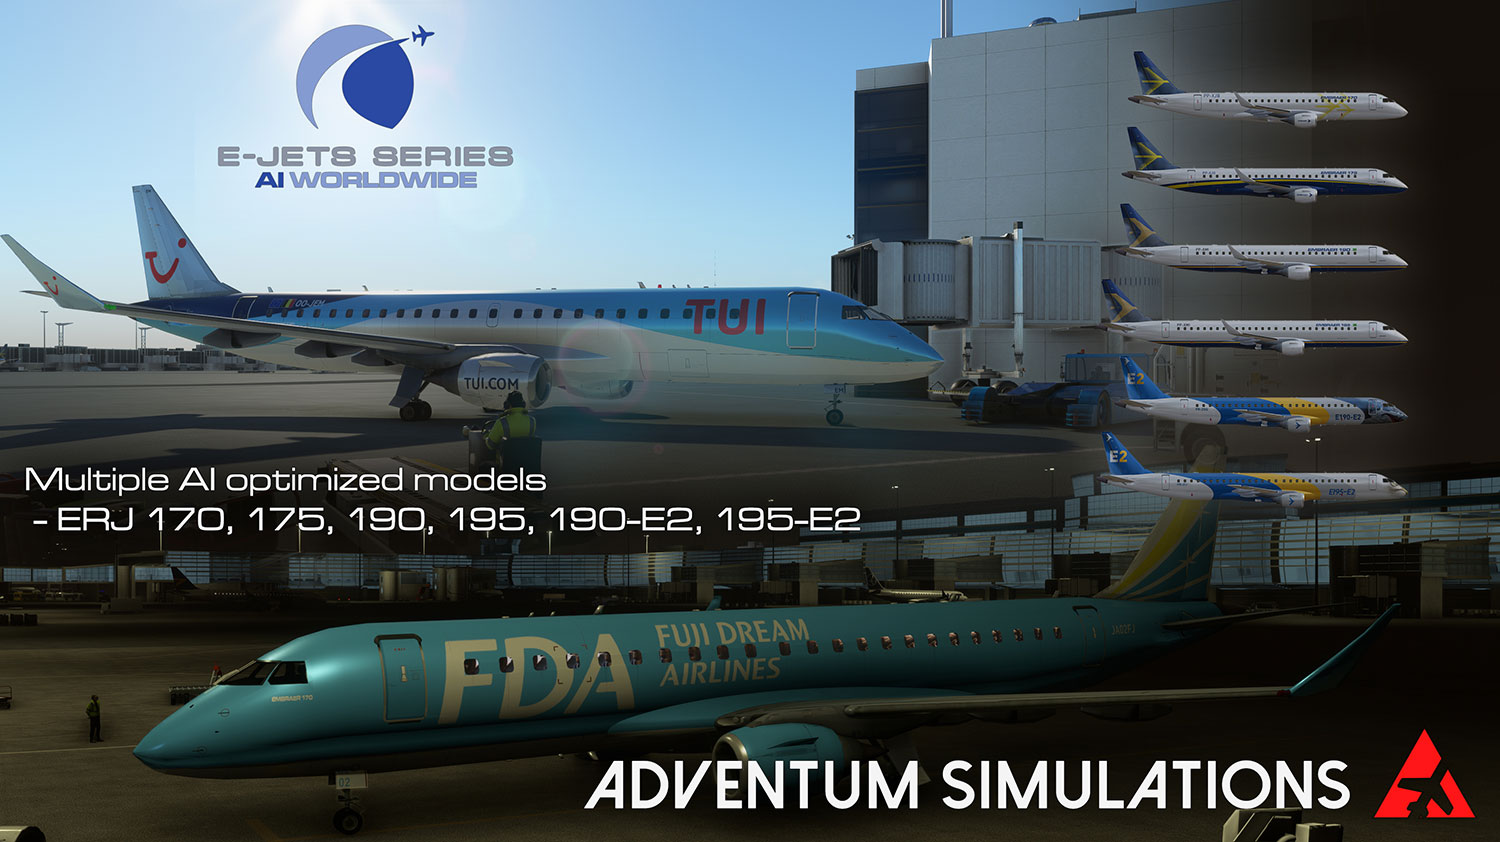 Adventum Simulations - AI Worldwide: E-Jets Series MSFS